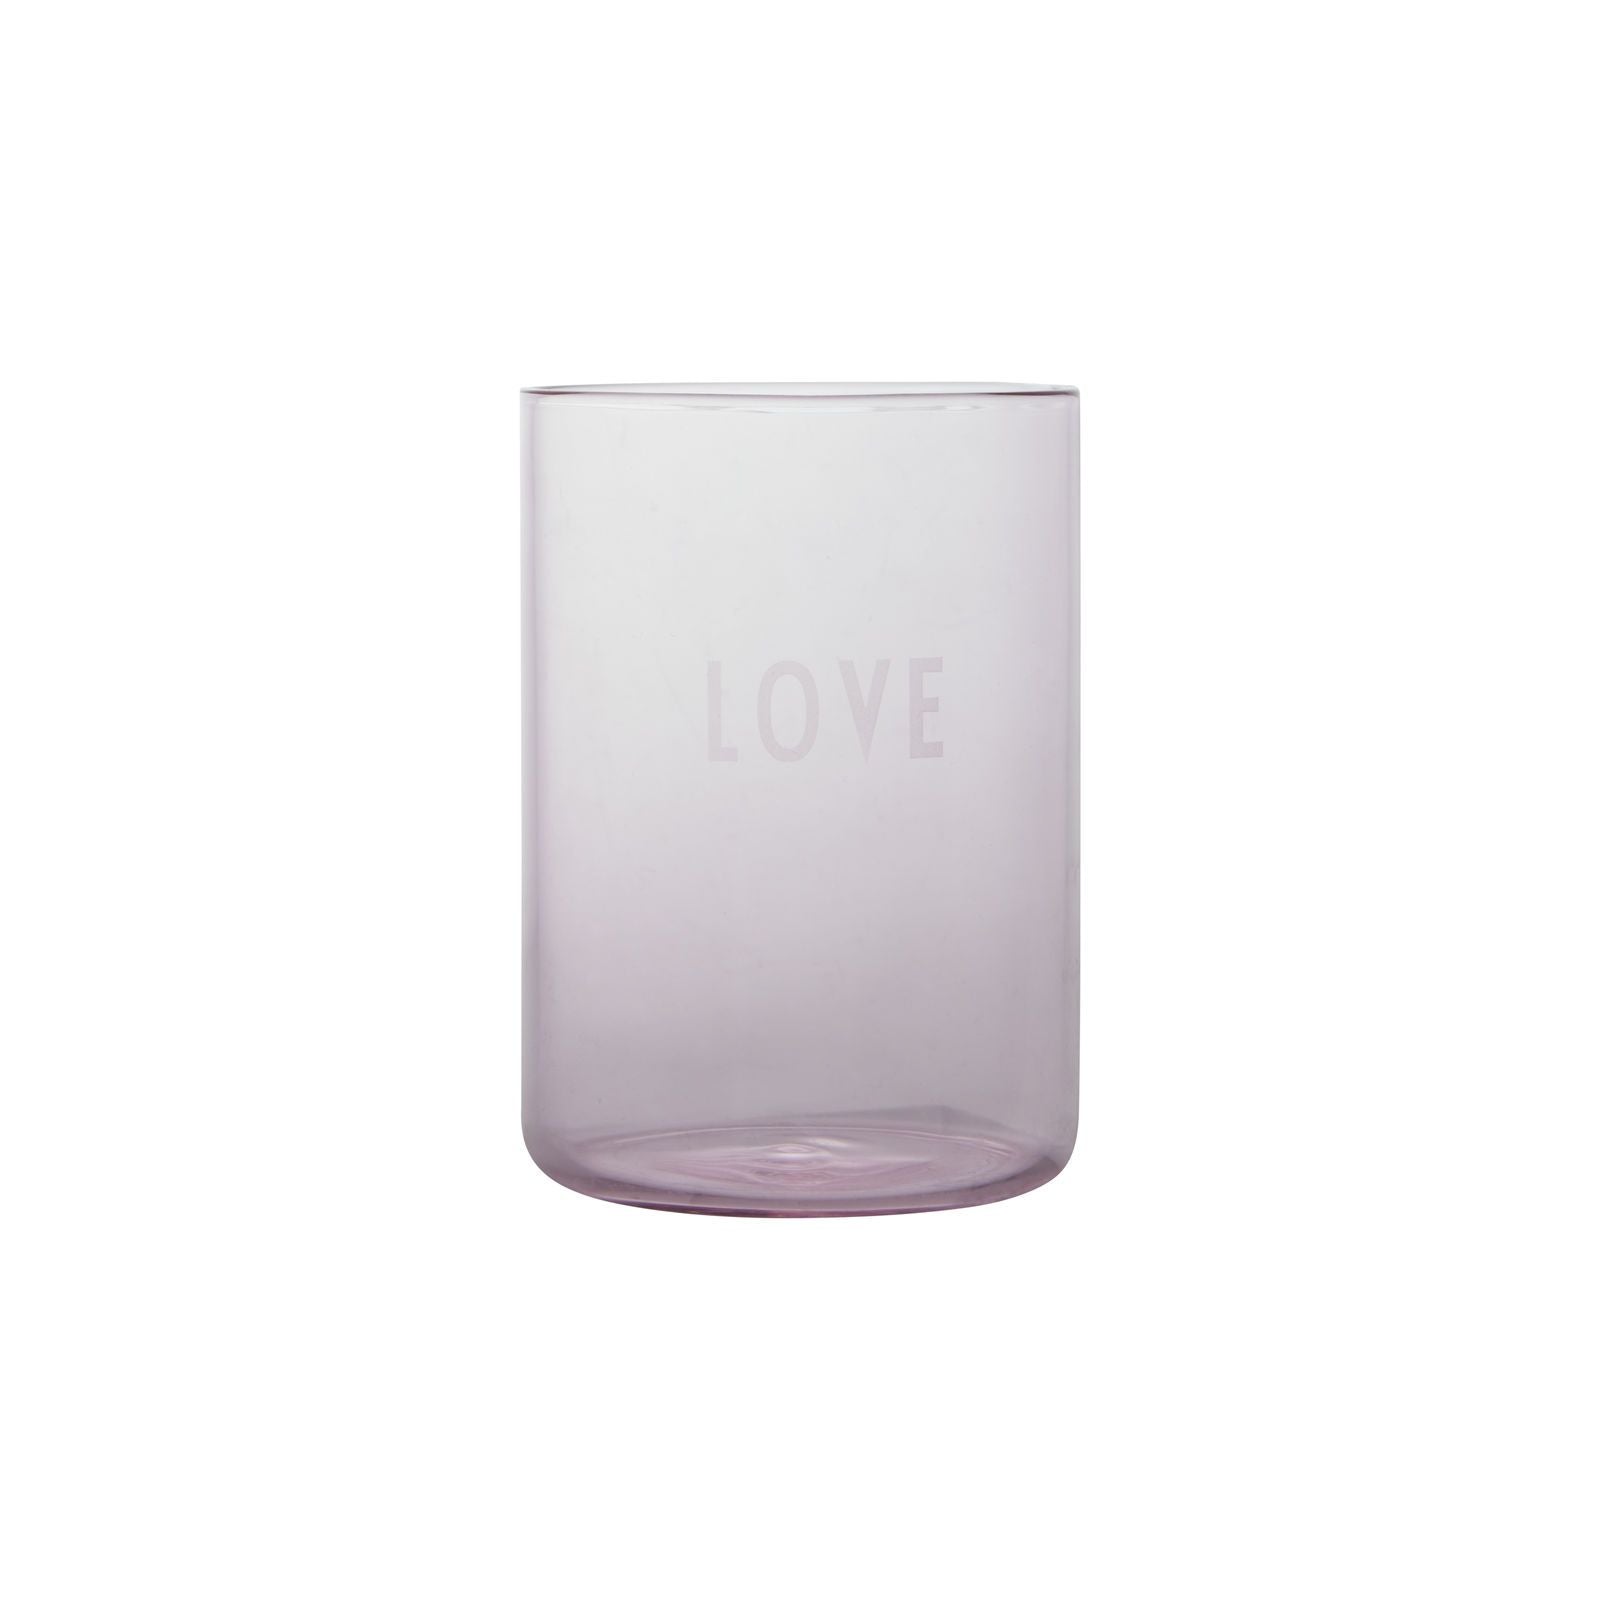 De favoriete drinkglas liefde van designletter, Rose